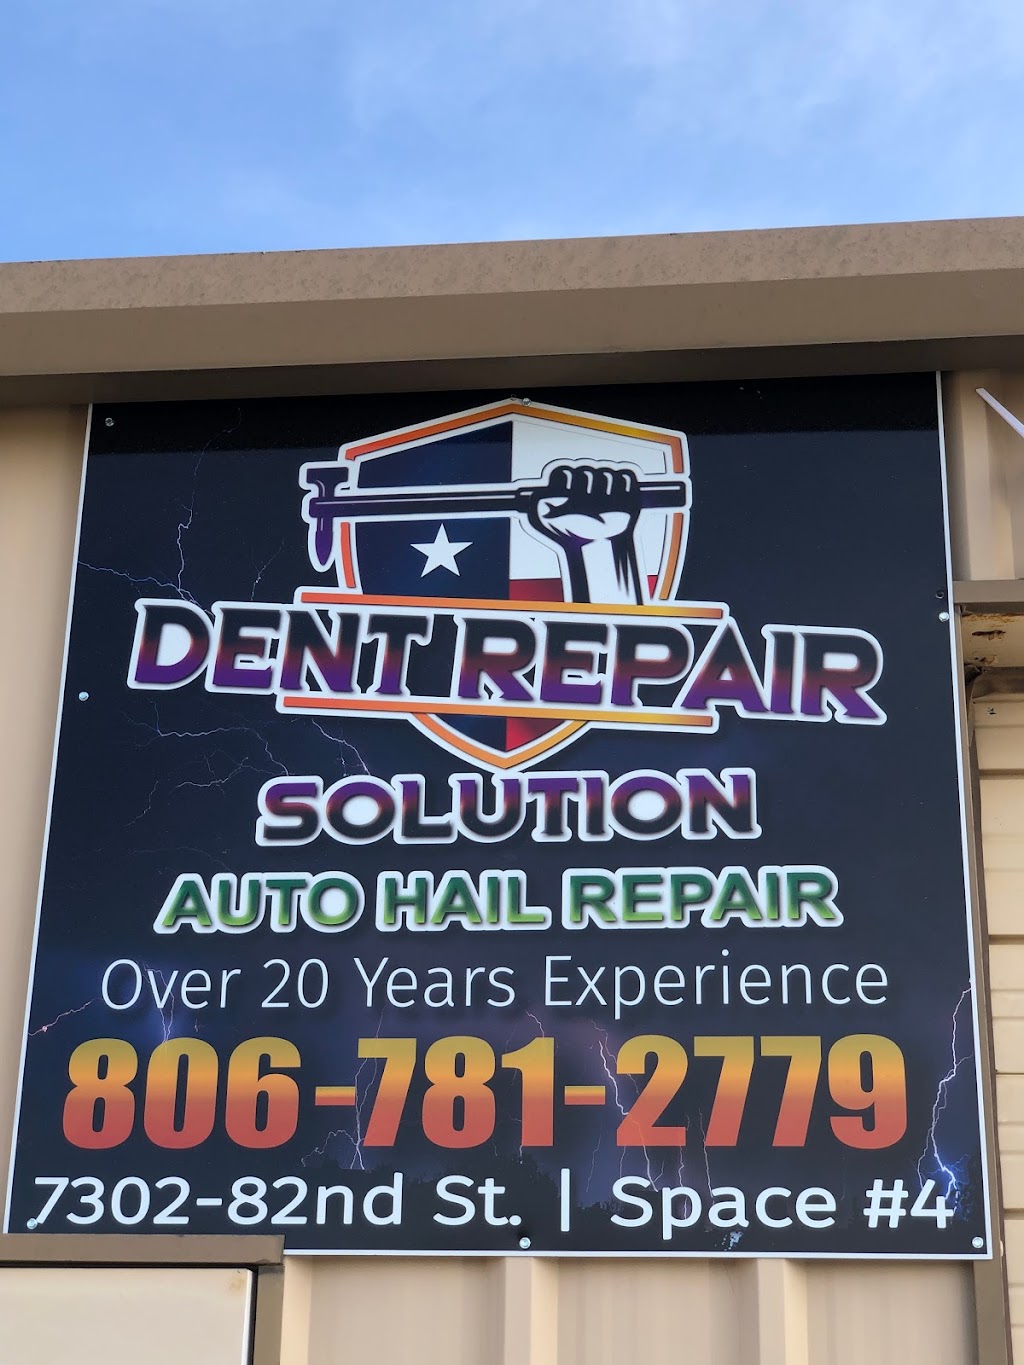 Dent Repair Solution | 445 E Hwy 62 #82, Wolfforth, TX 79382, USA | Phone: (806) 781-2779